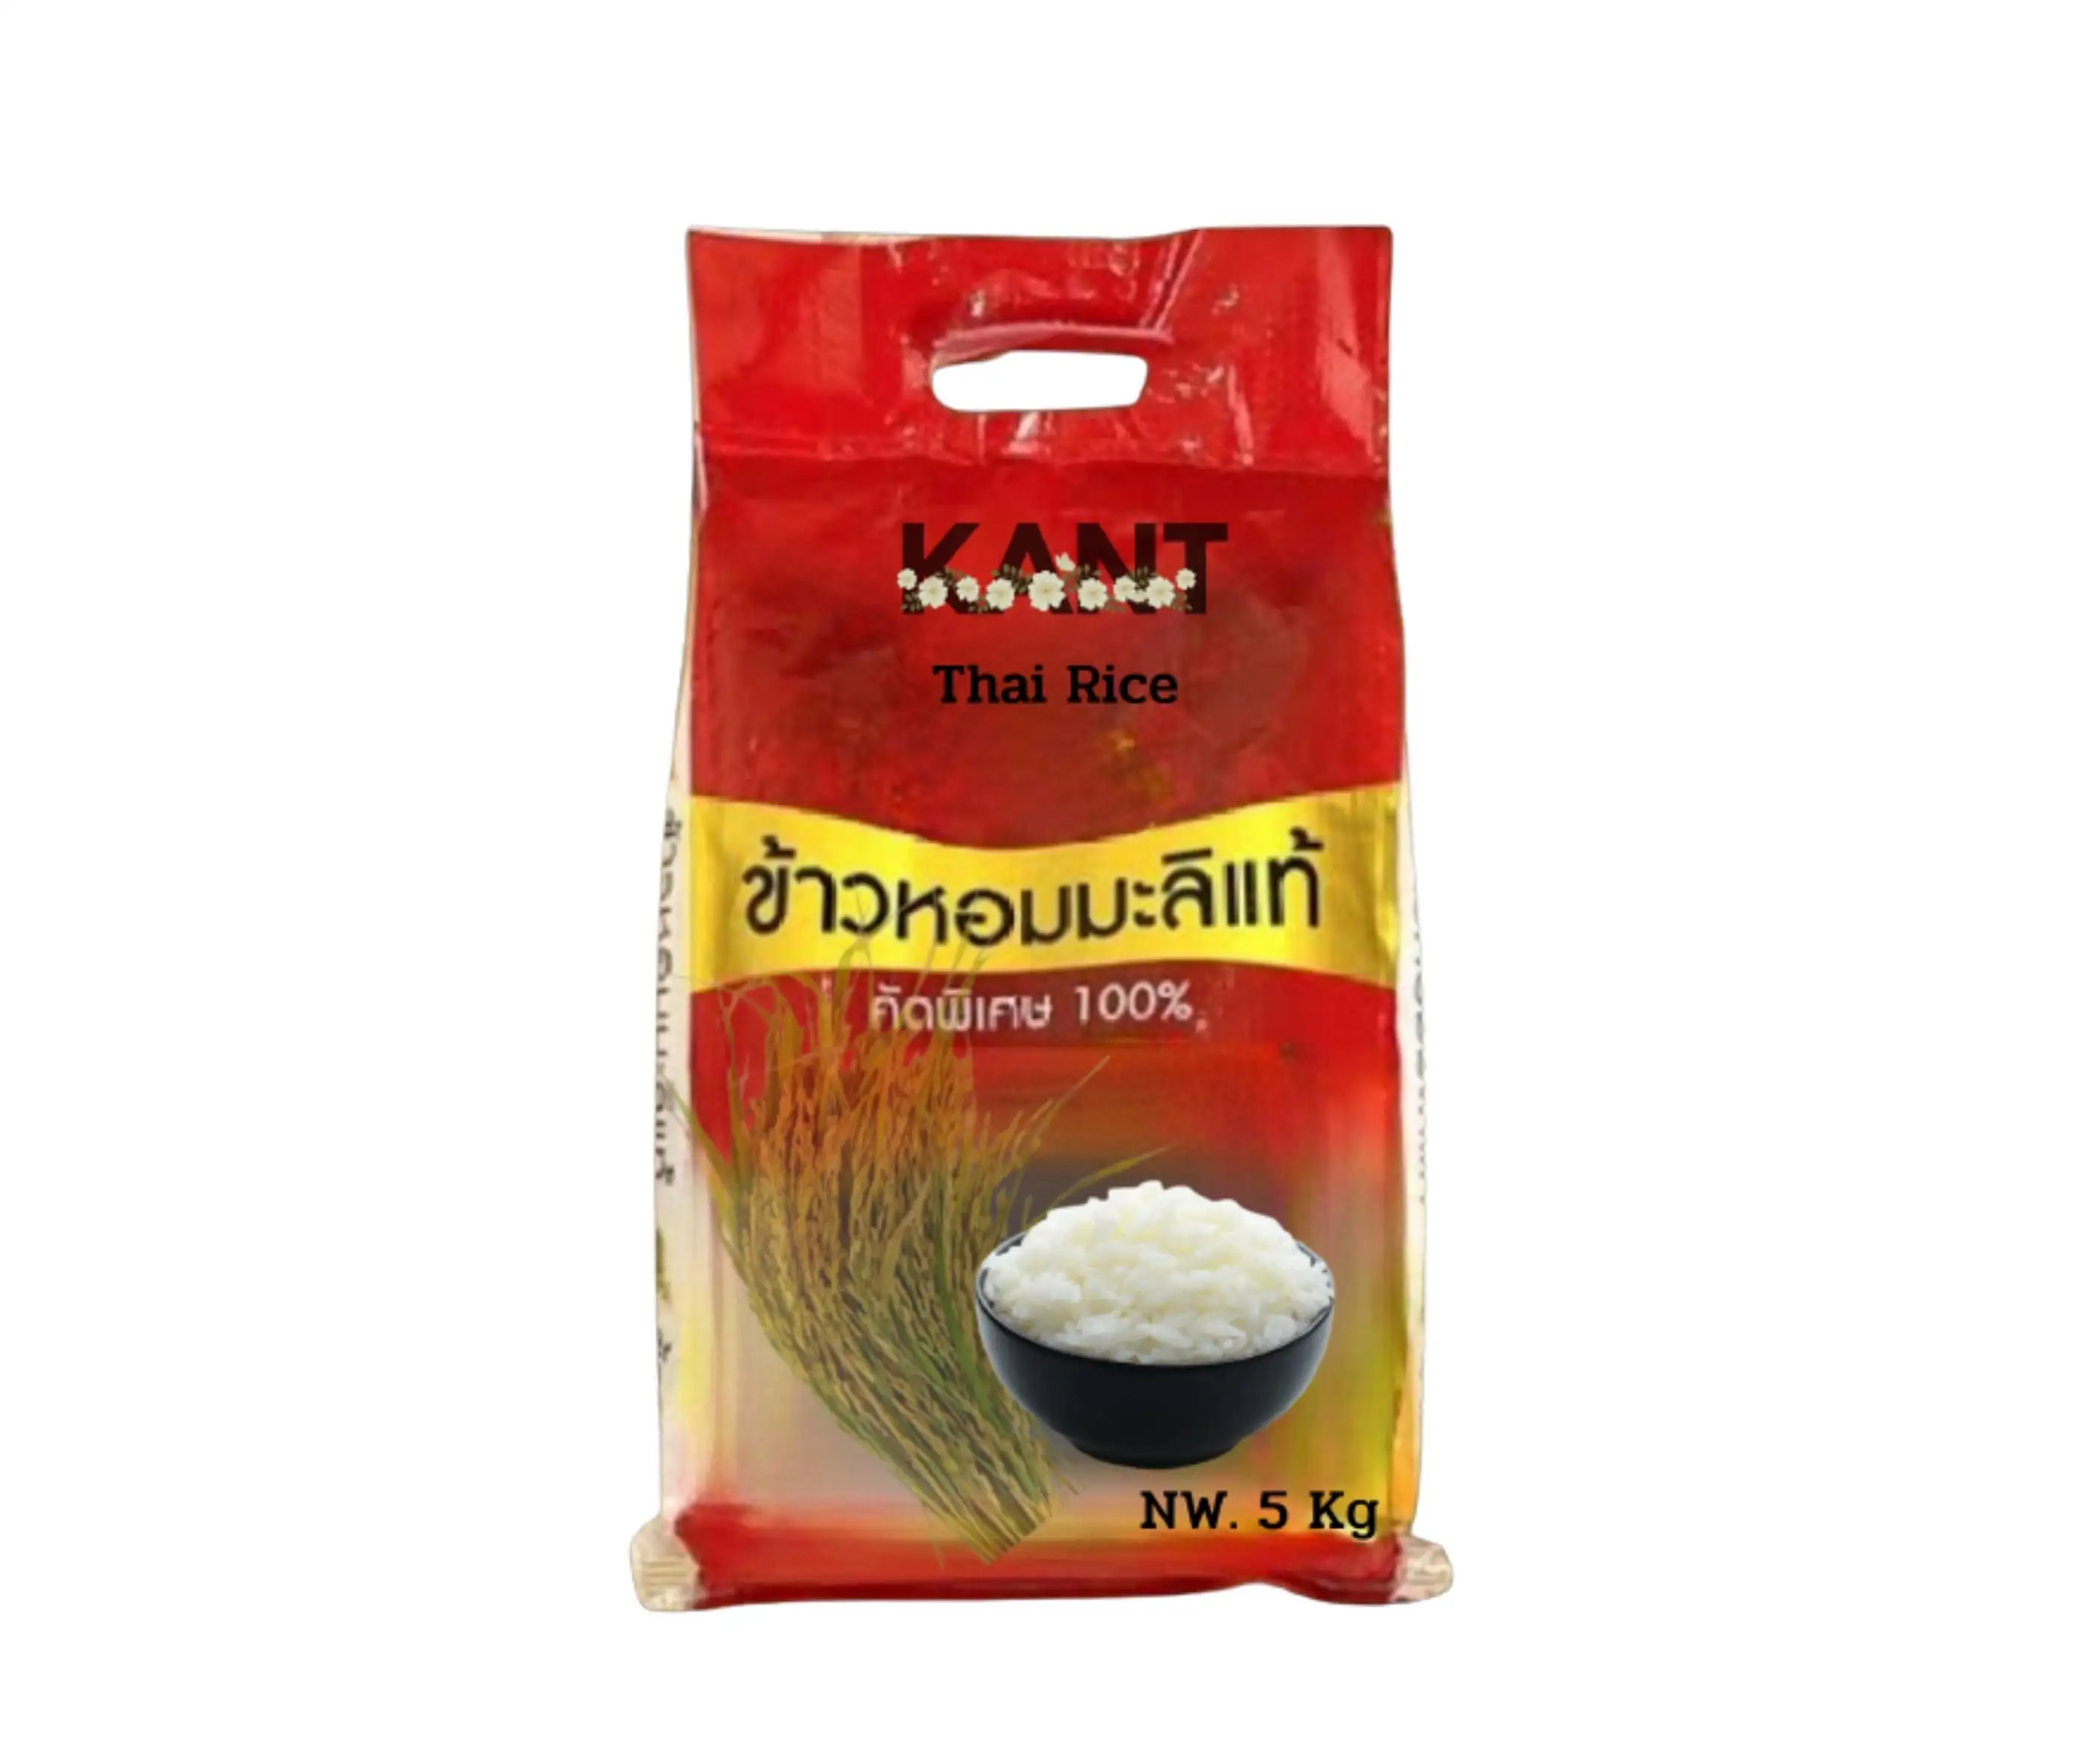 Hommali Jasmine KANT Thai Rice 5 KG Thai Rice Premium Grade From Thailand Export Grade